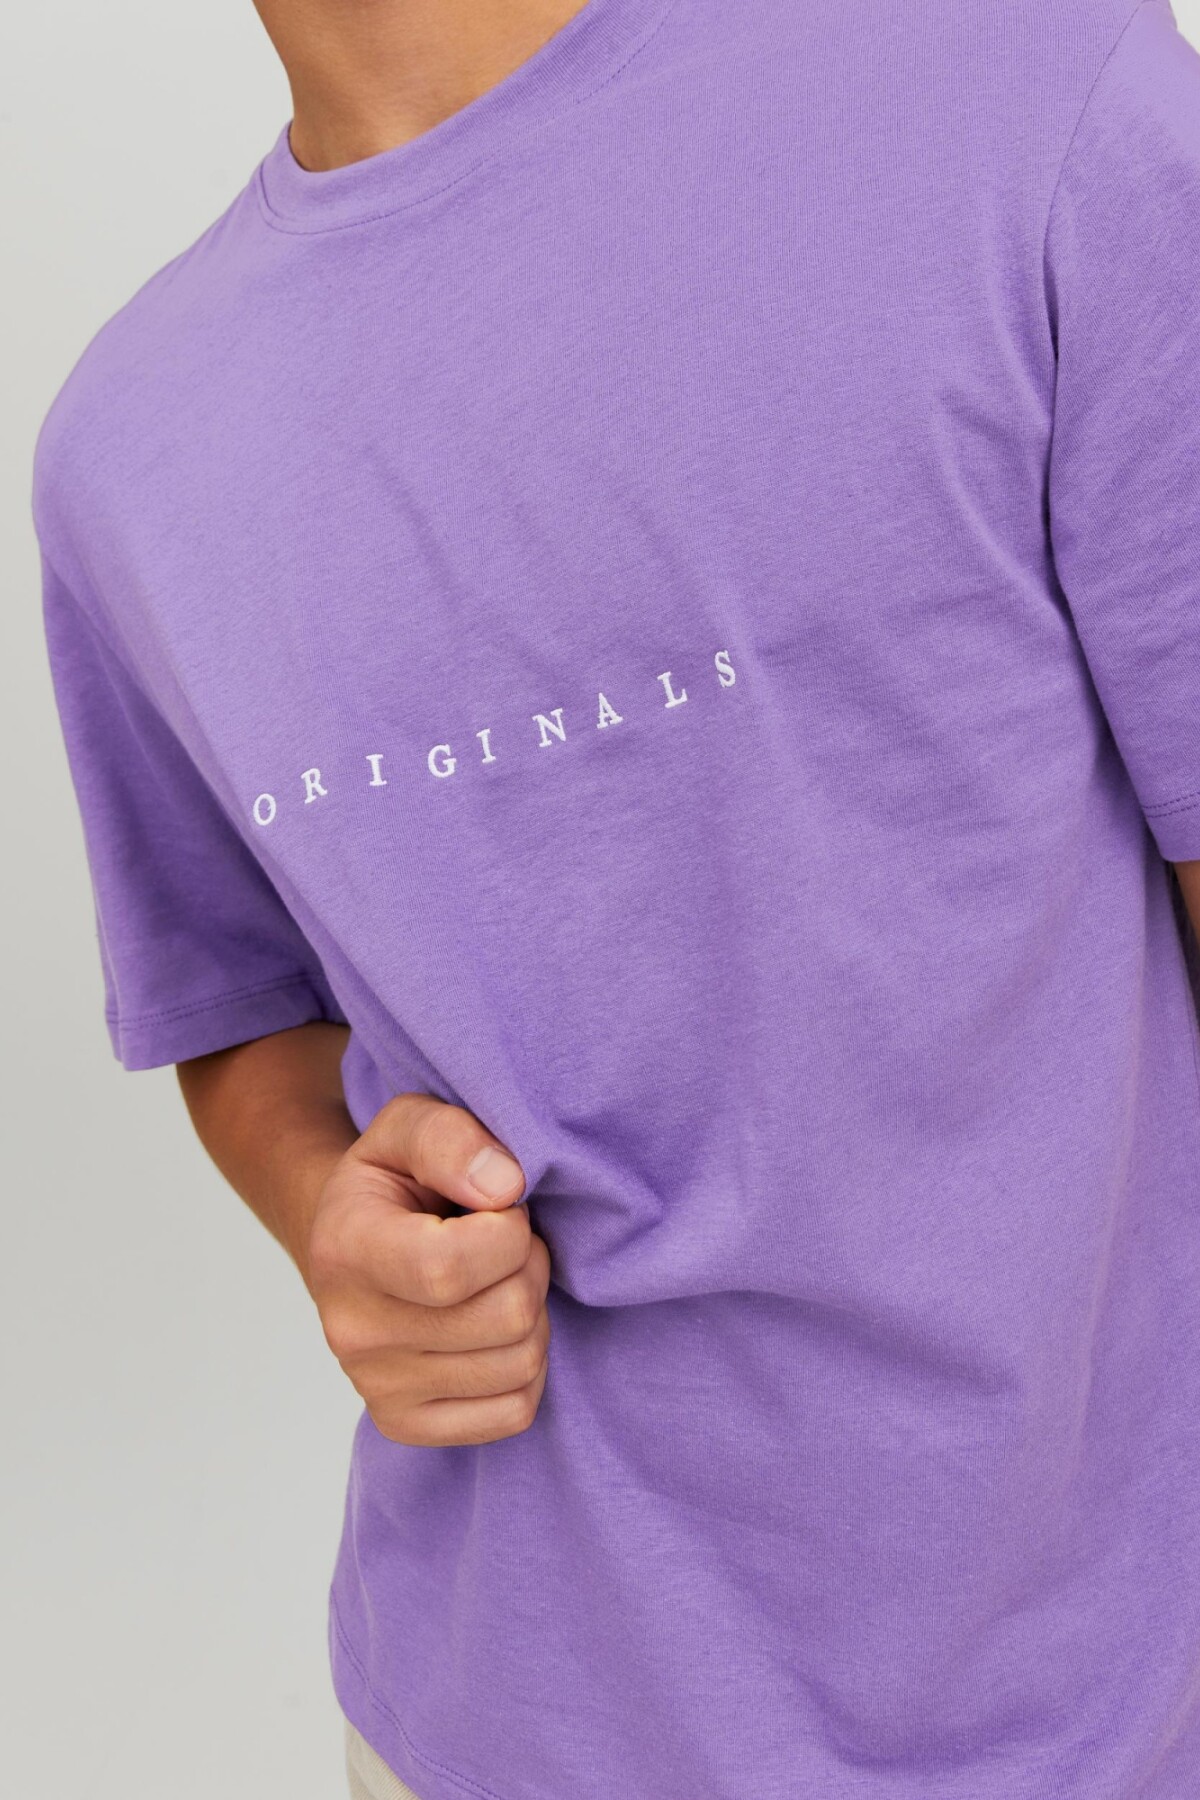 Camiseta Copenhagen Clásica Deep Lavender